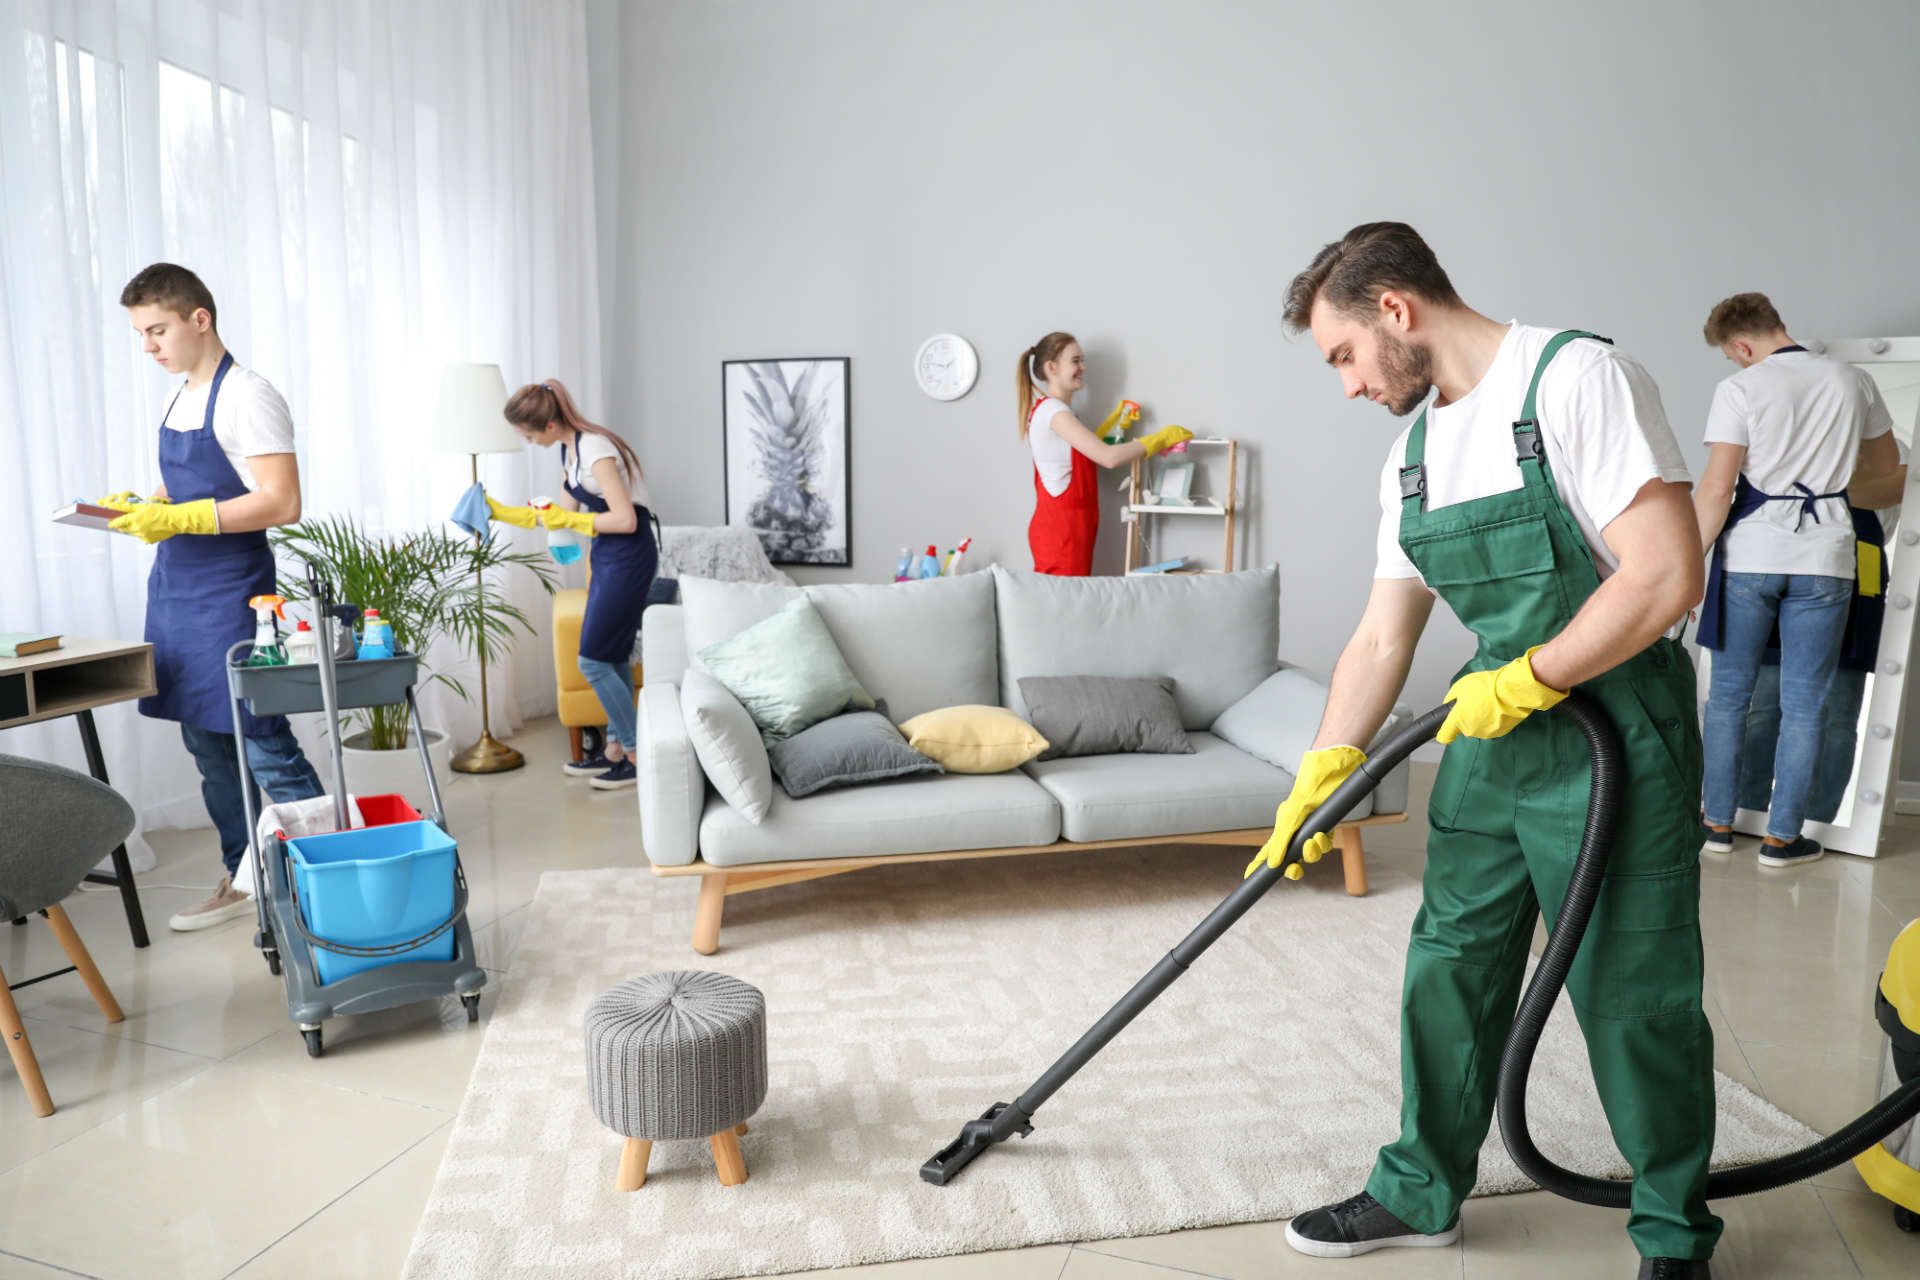 same-day cleaning service dubai